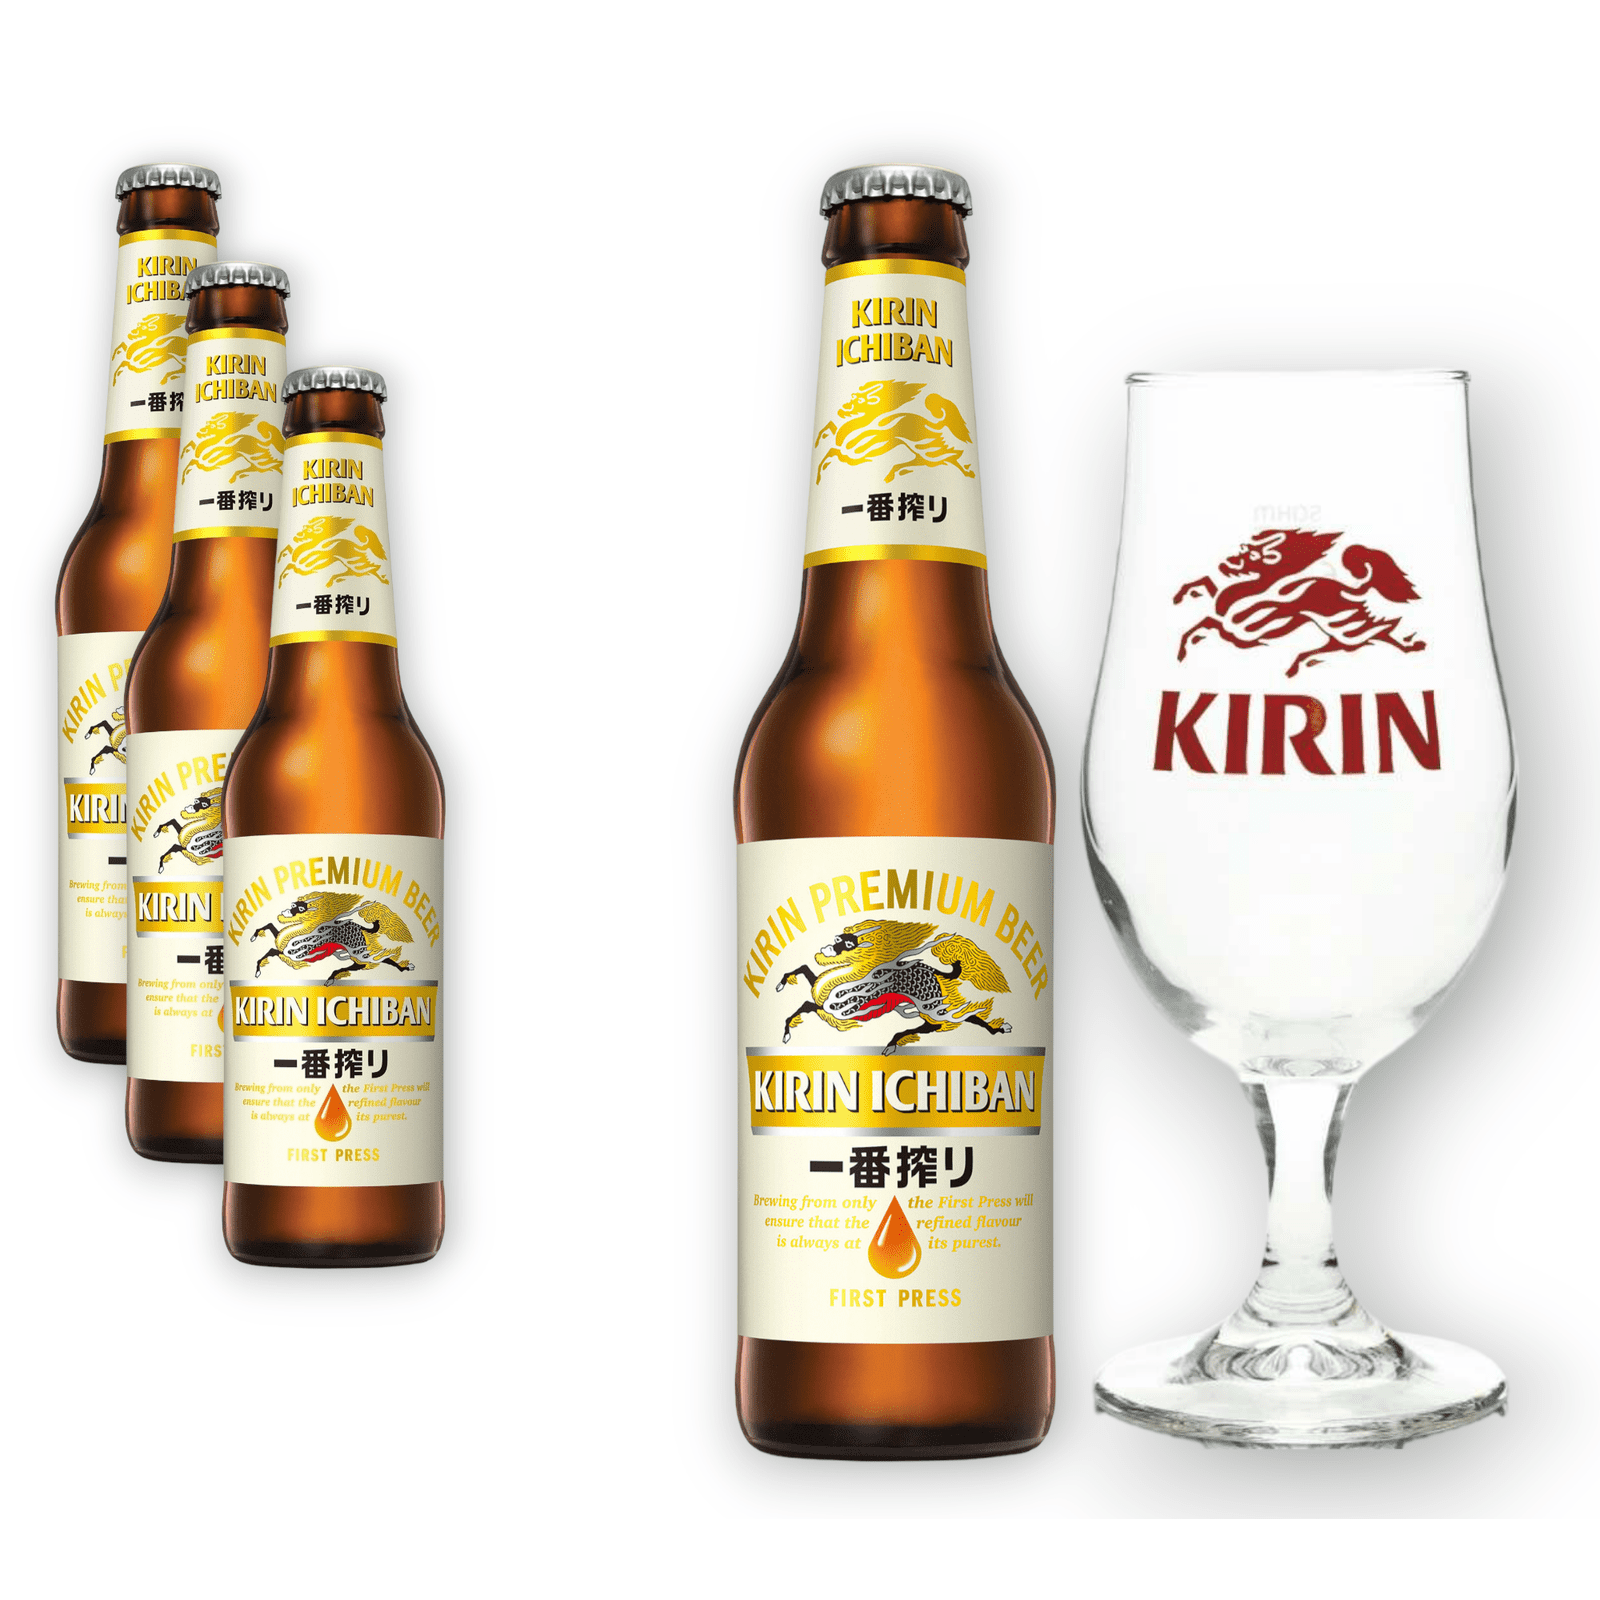 Kirin Ichiban Bier 0,3l + Original Bierglas/ Pint 0,2l- Japanisches Premium Bier mit 5% Vol.